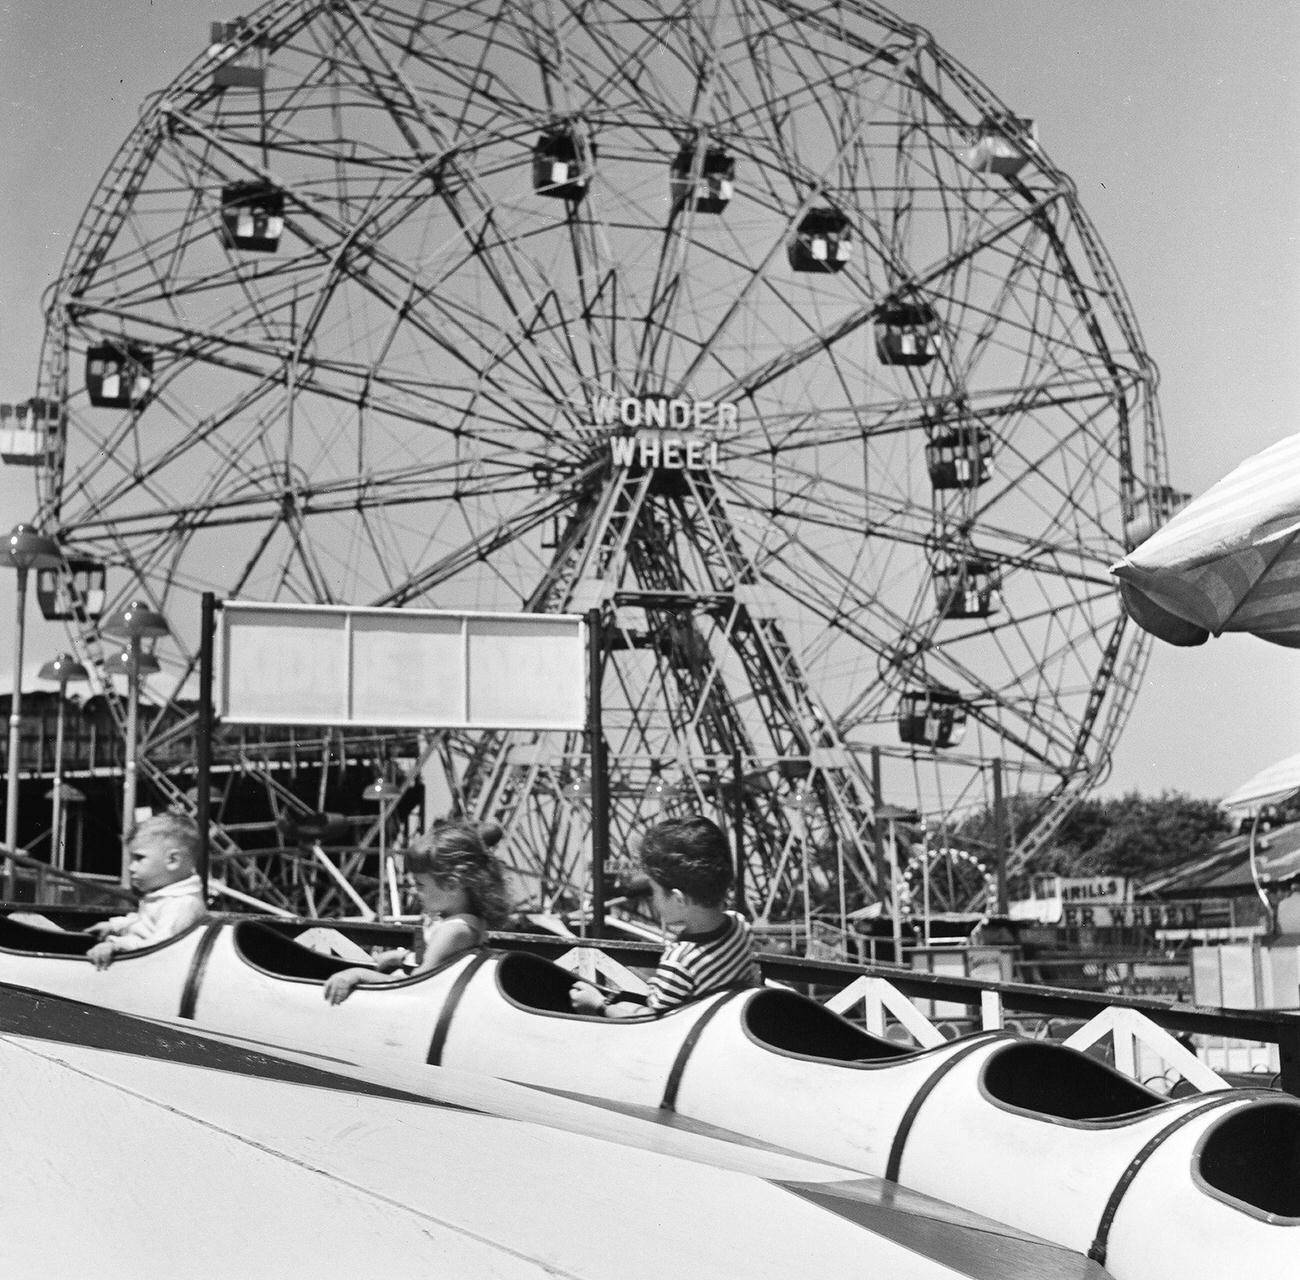 Three Children Enjoy A Ride With The 'Wonder Wheel' Ferris Wheel In The Background At Coney Island, 1948